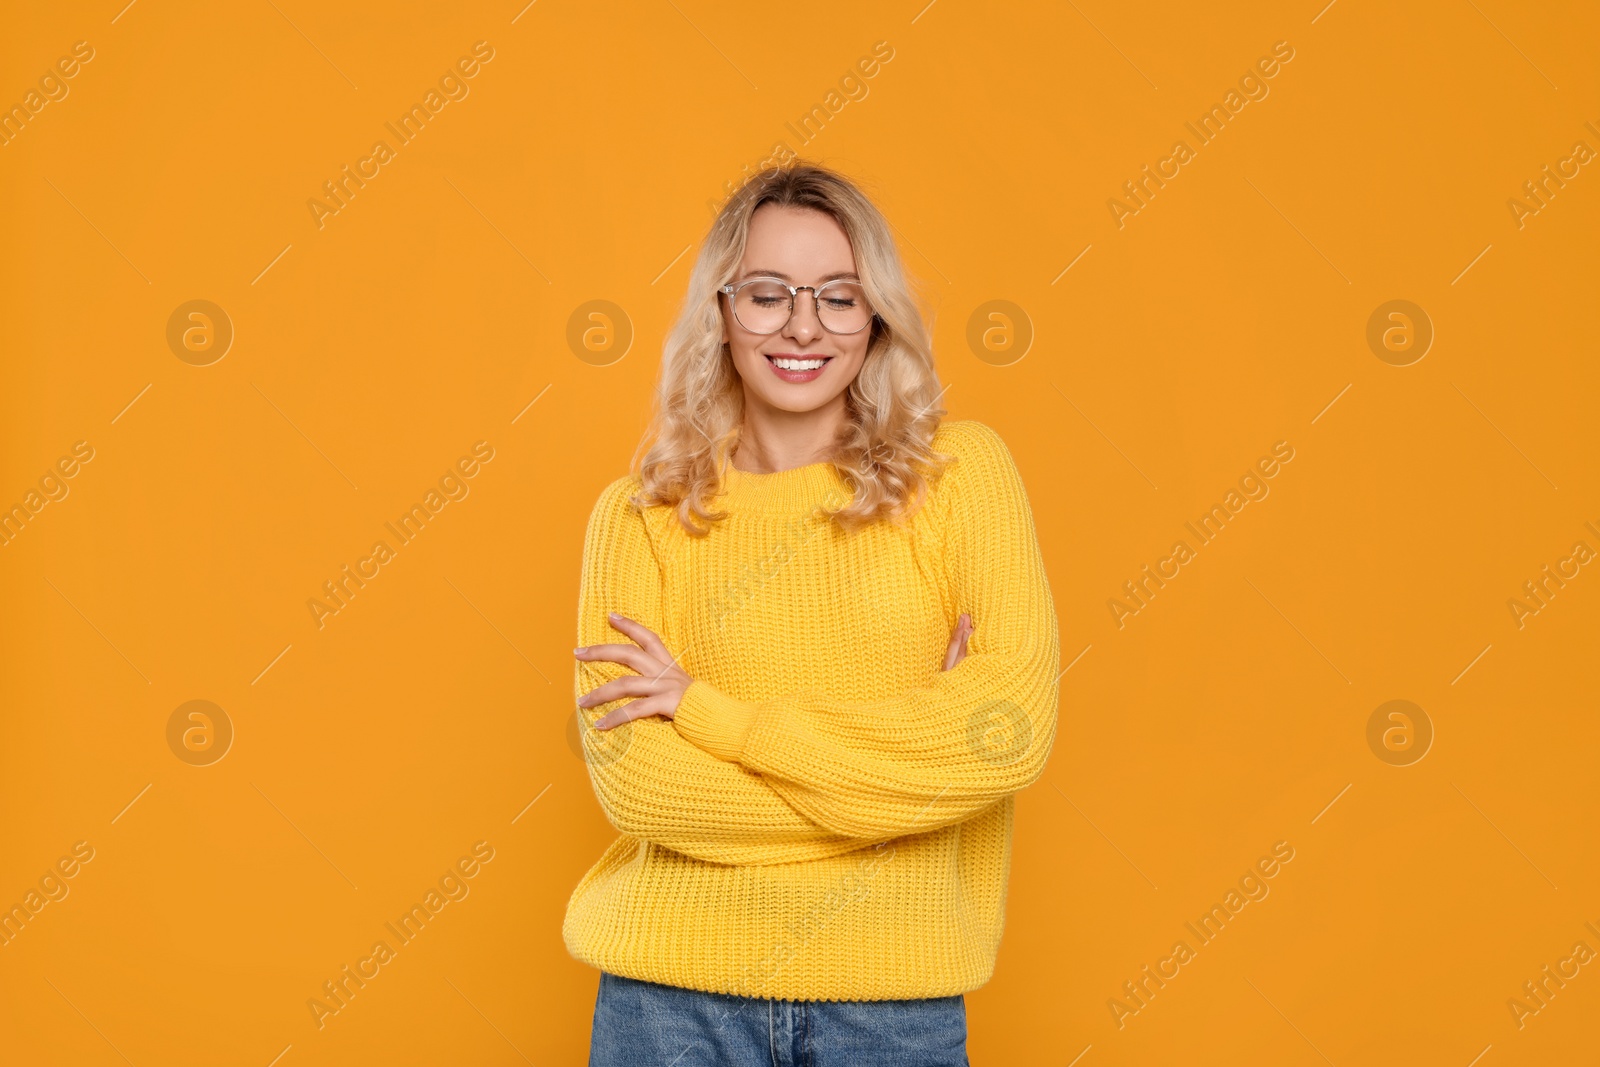 Photo of Happy woman in stylish warm sweater and eyeglasses on orange background